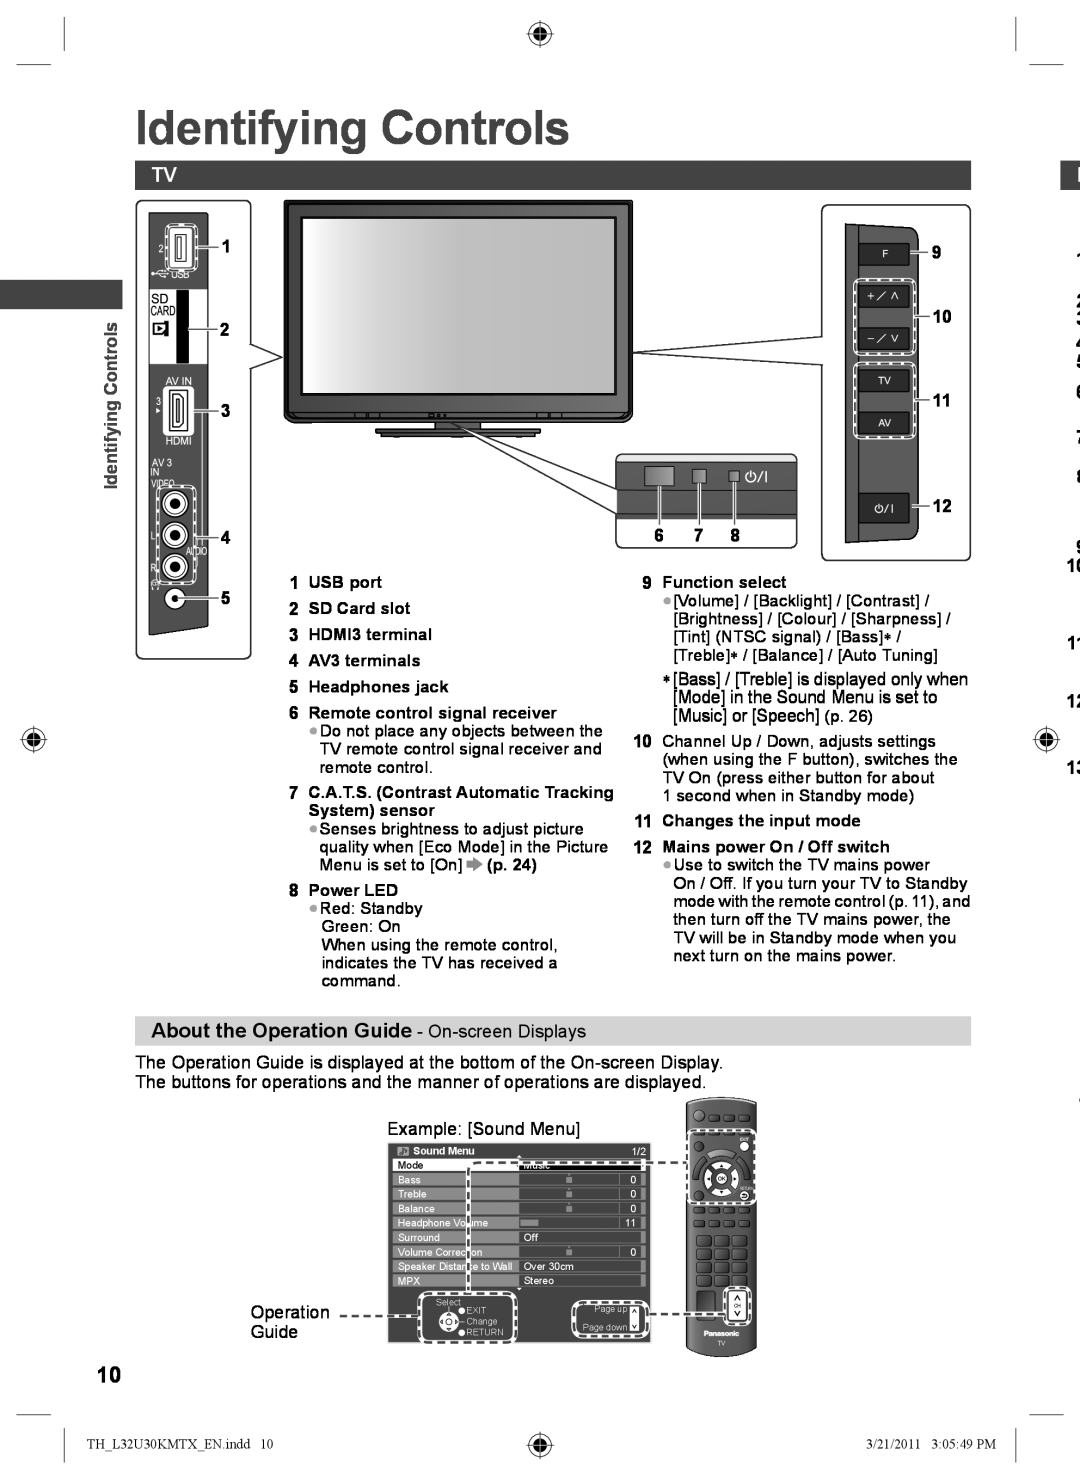 Panasonic TH-L32U30M, TH-L32U30T Identifying Controls, About the Operation Guide - On-screen Displays, Example Sound Menu 